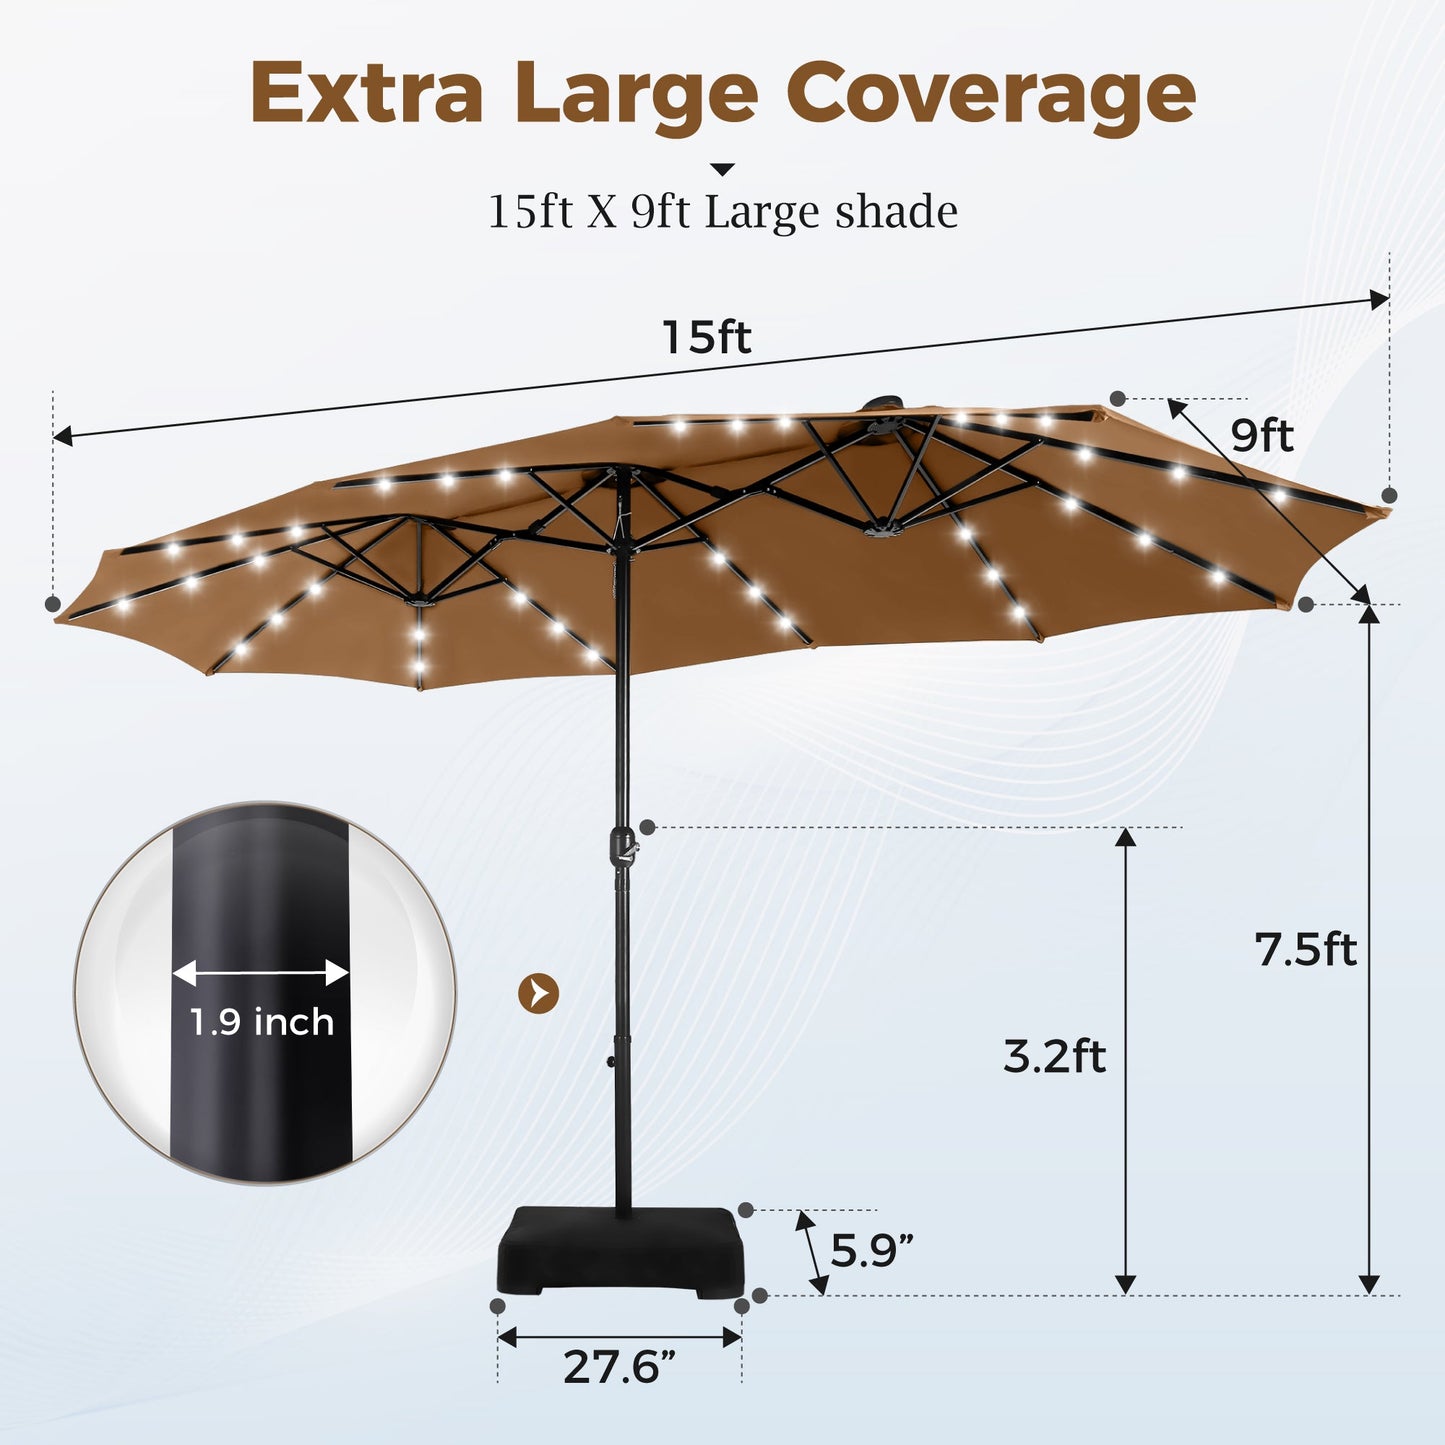 Alpha Joy 15ft Extra Large Outdoor Patio Double-Sided Umbrella with Solar Lights & Umbrella Base, Maillard Brown